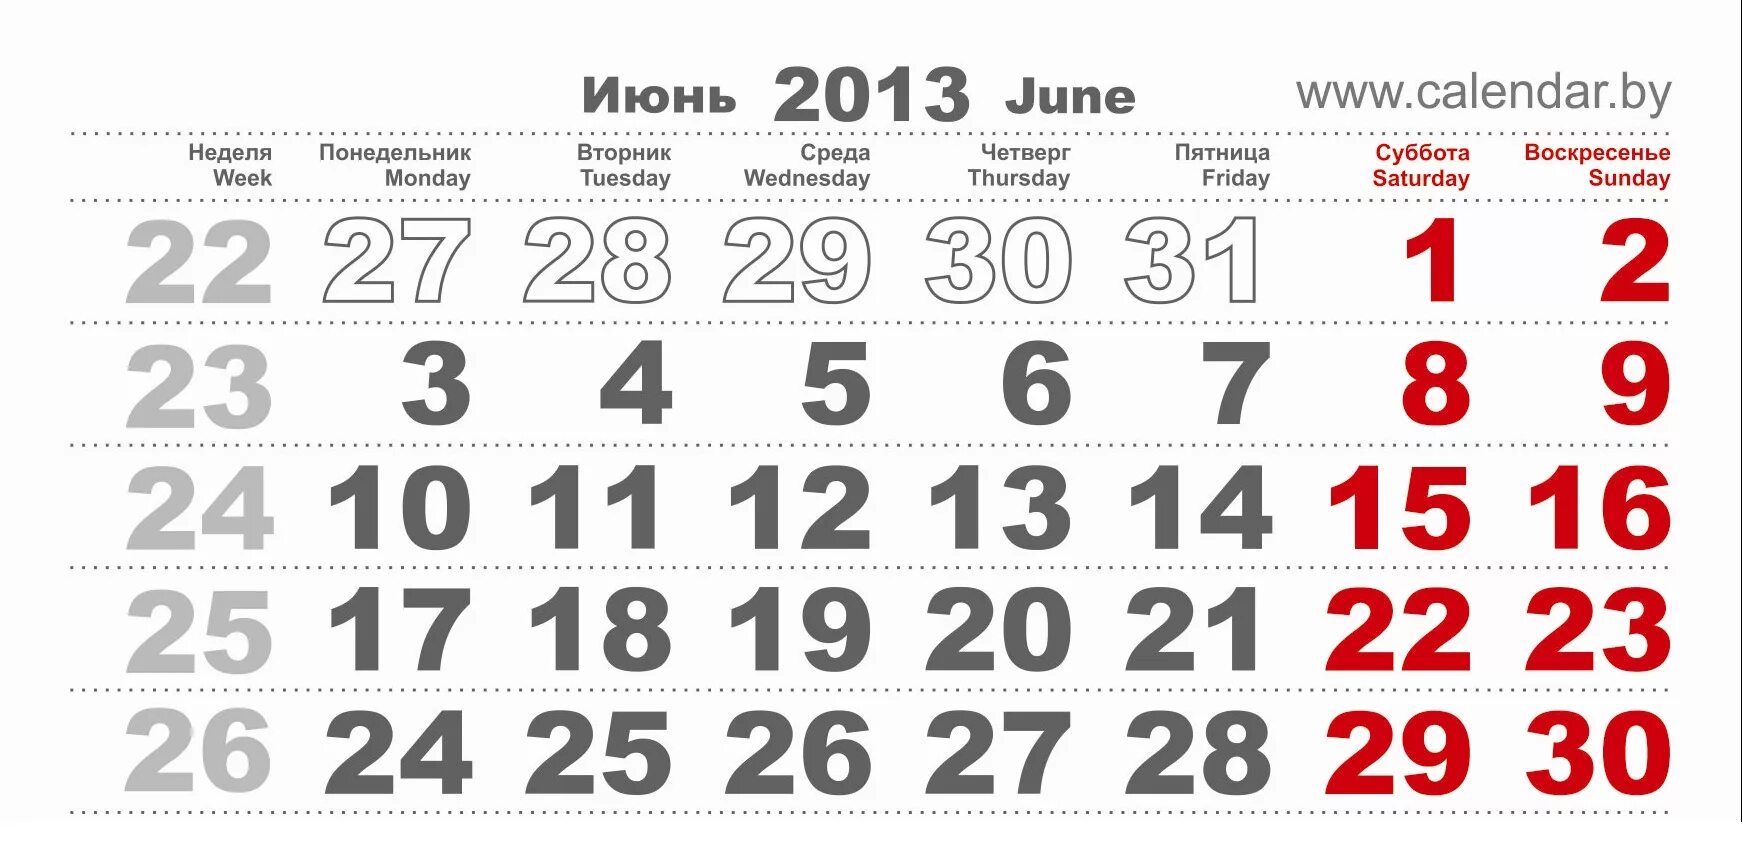 6 октябрь 2016. Календарь на март 2013 года. Июль 2013 года календарь. Март 2016 года. Октябрь 2016 года календарь.